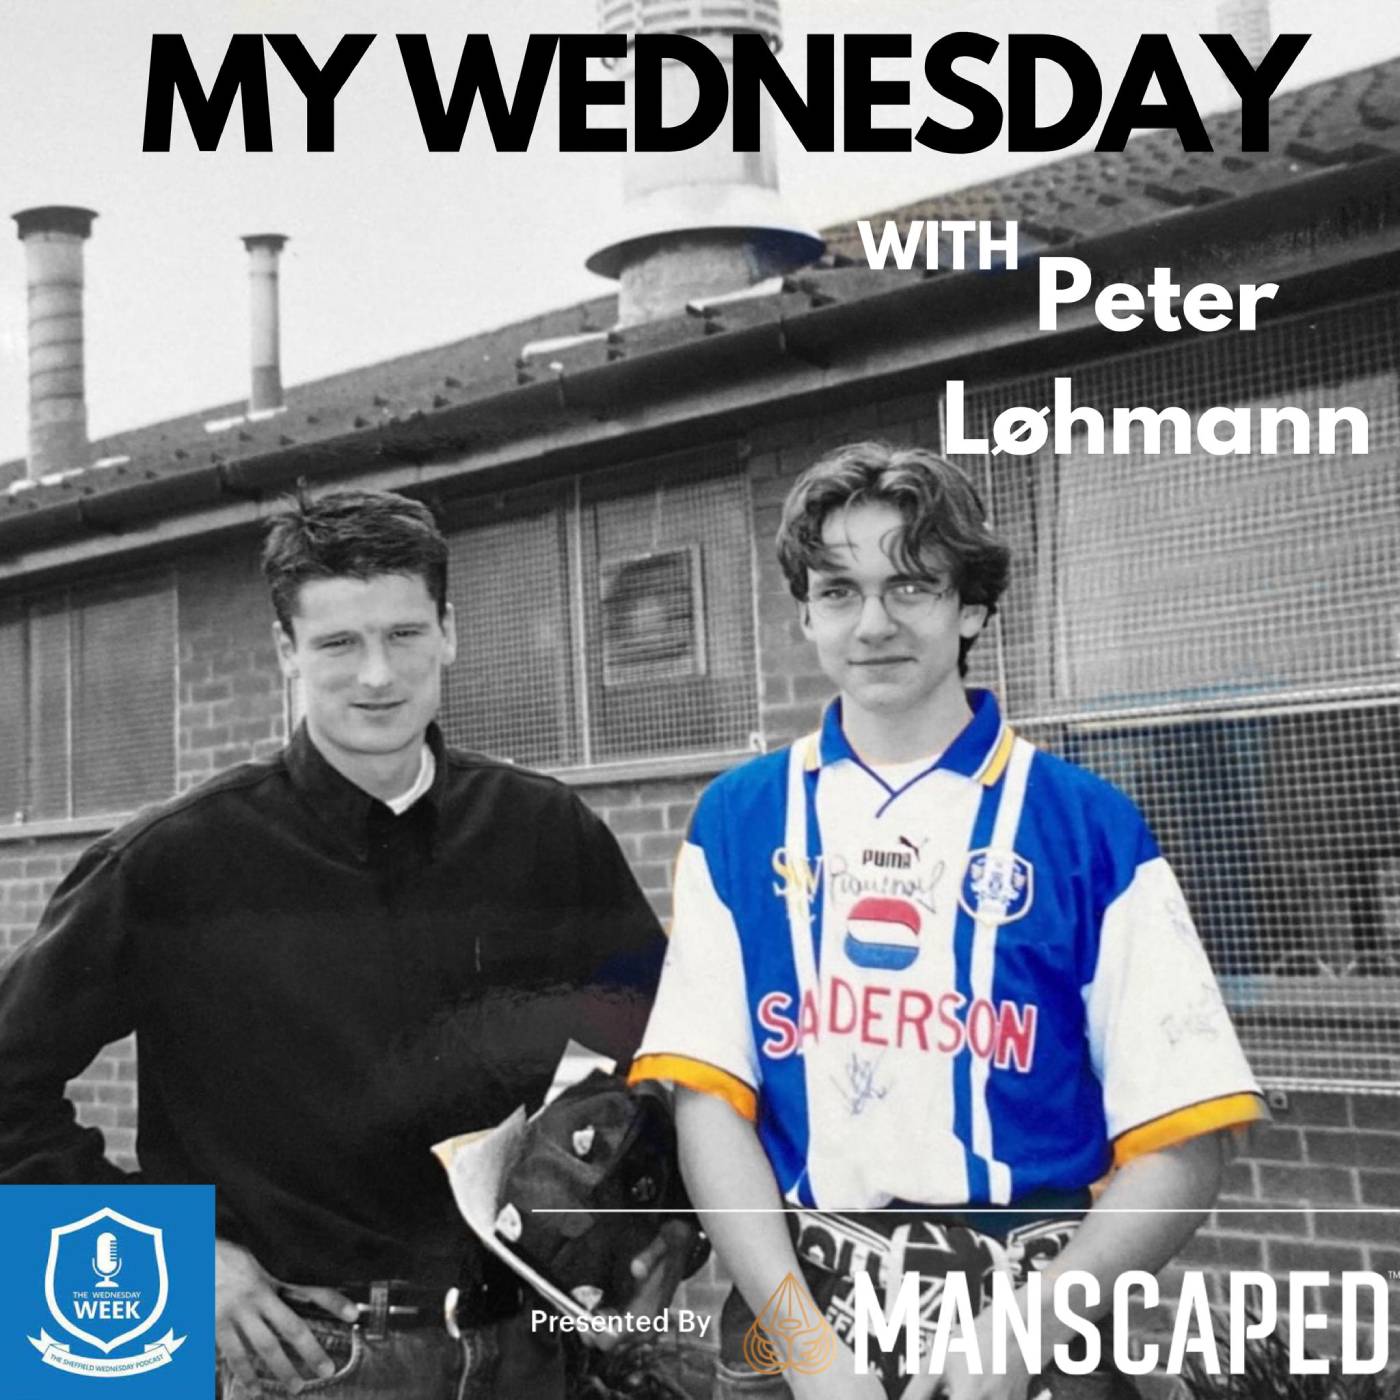 My Wednesday - Pete Lohmann